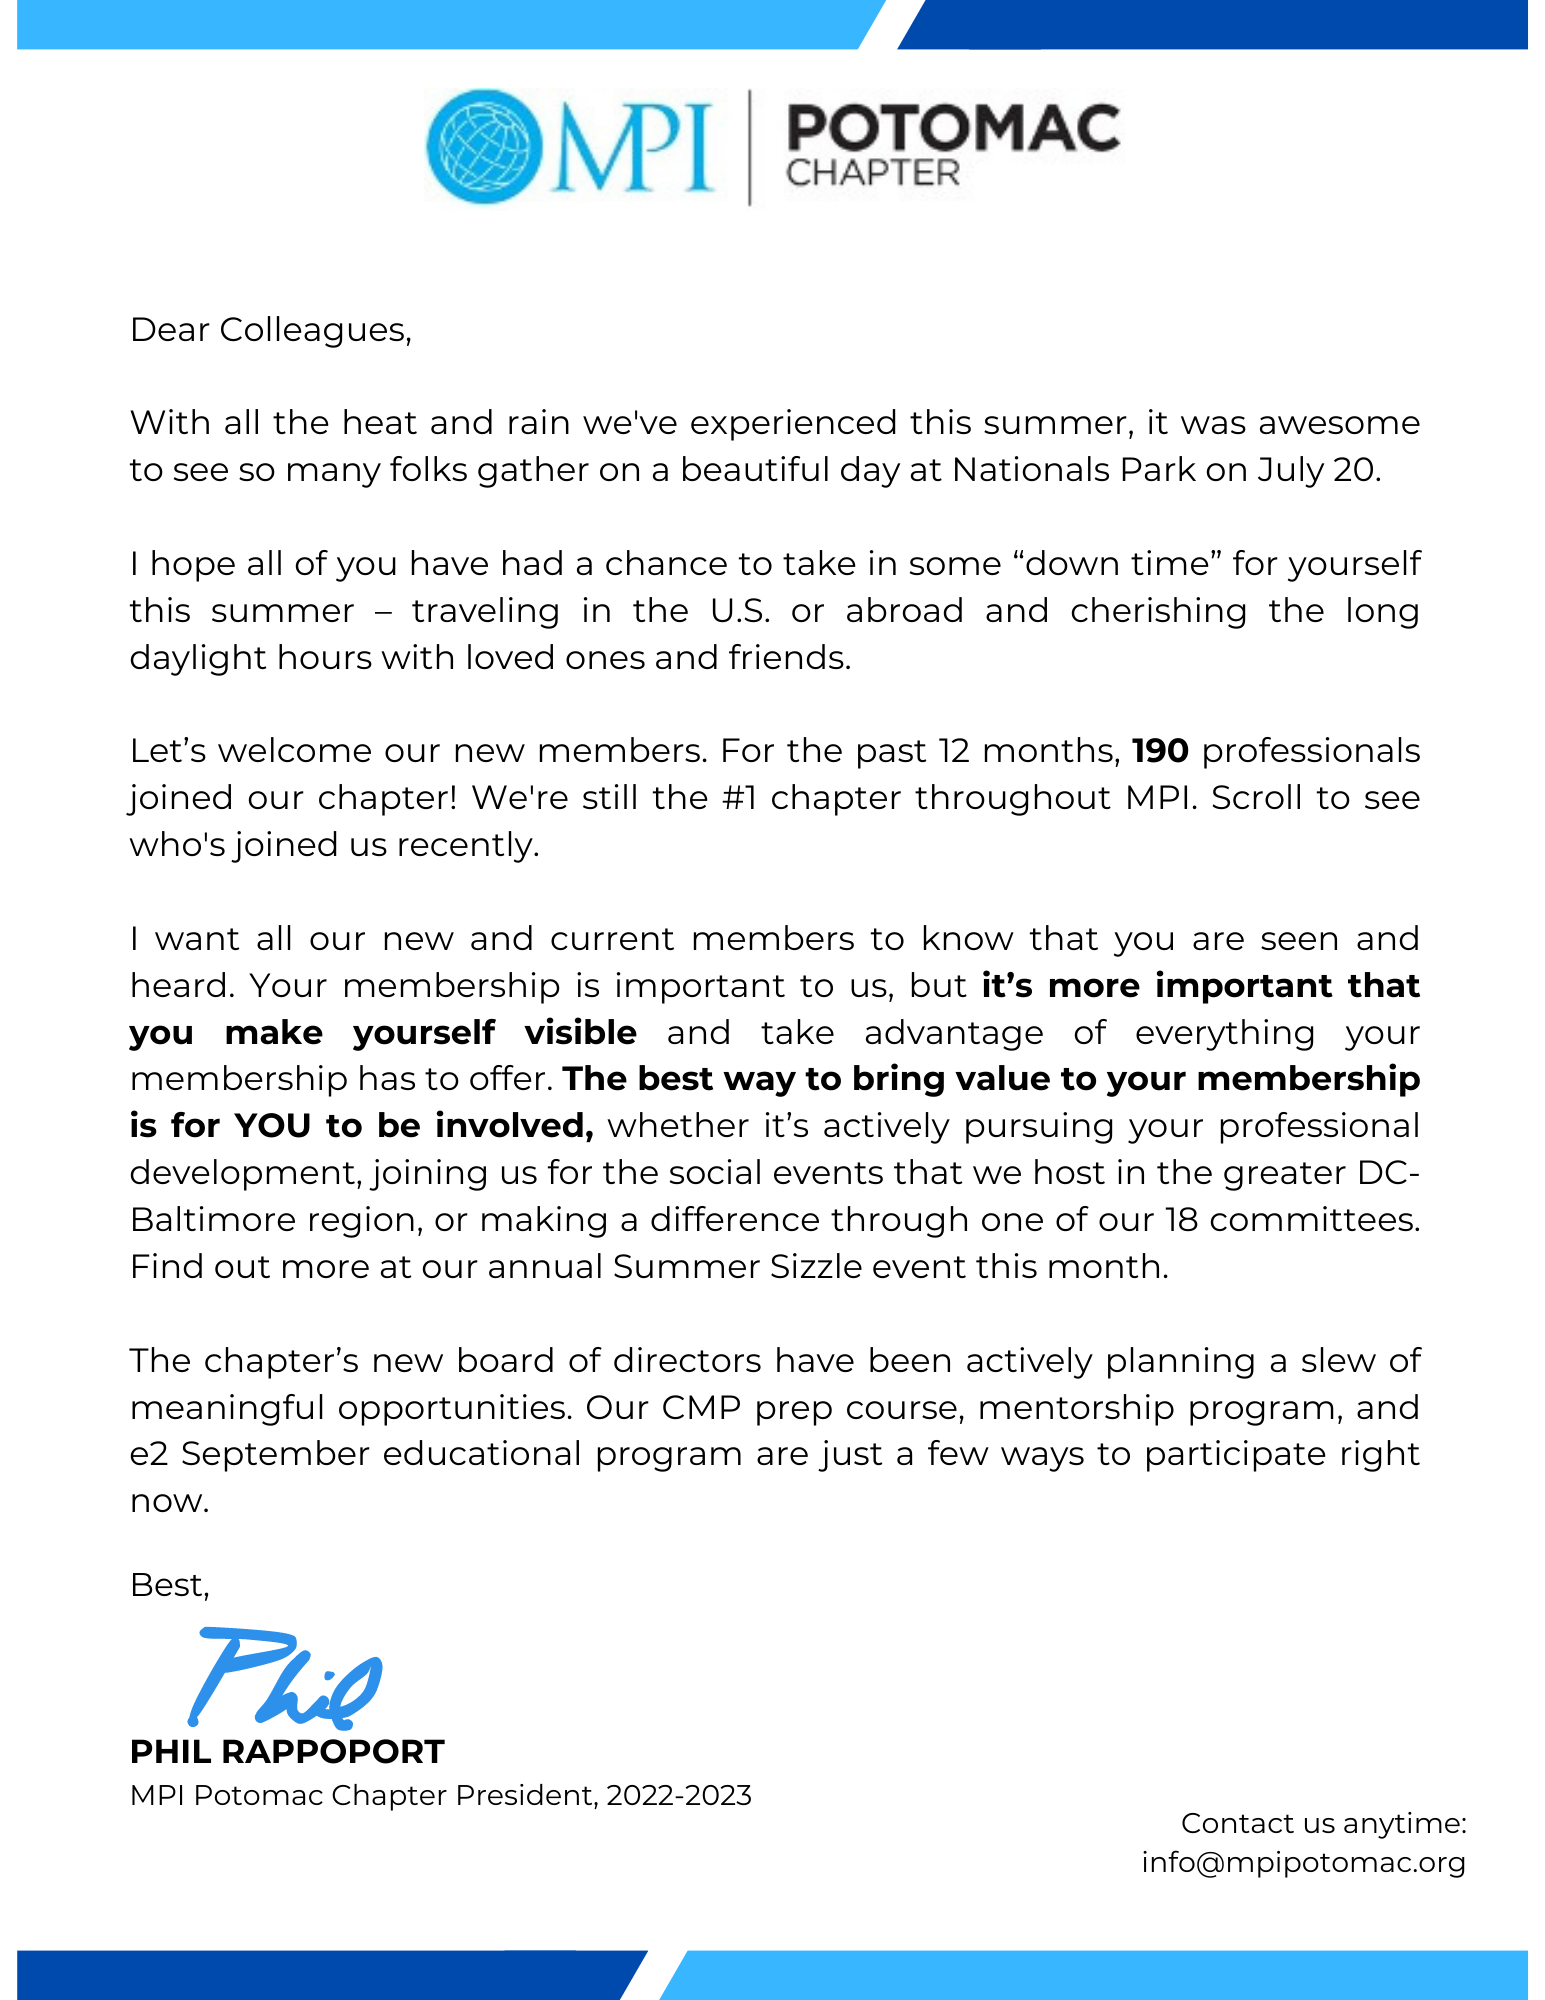 Phil's Aug 2023 Letter